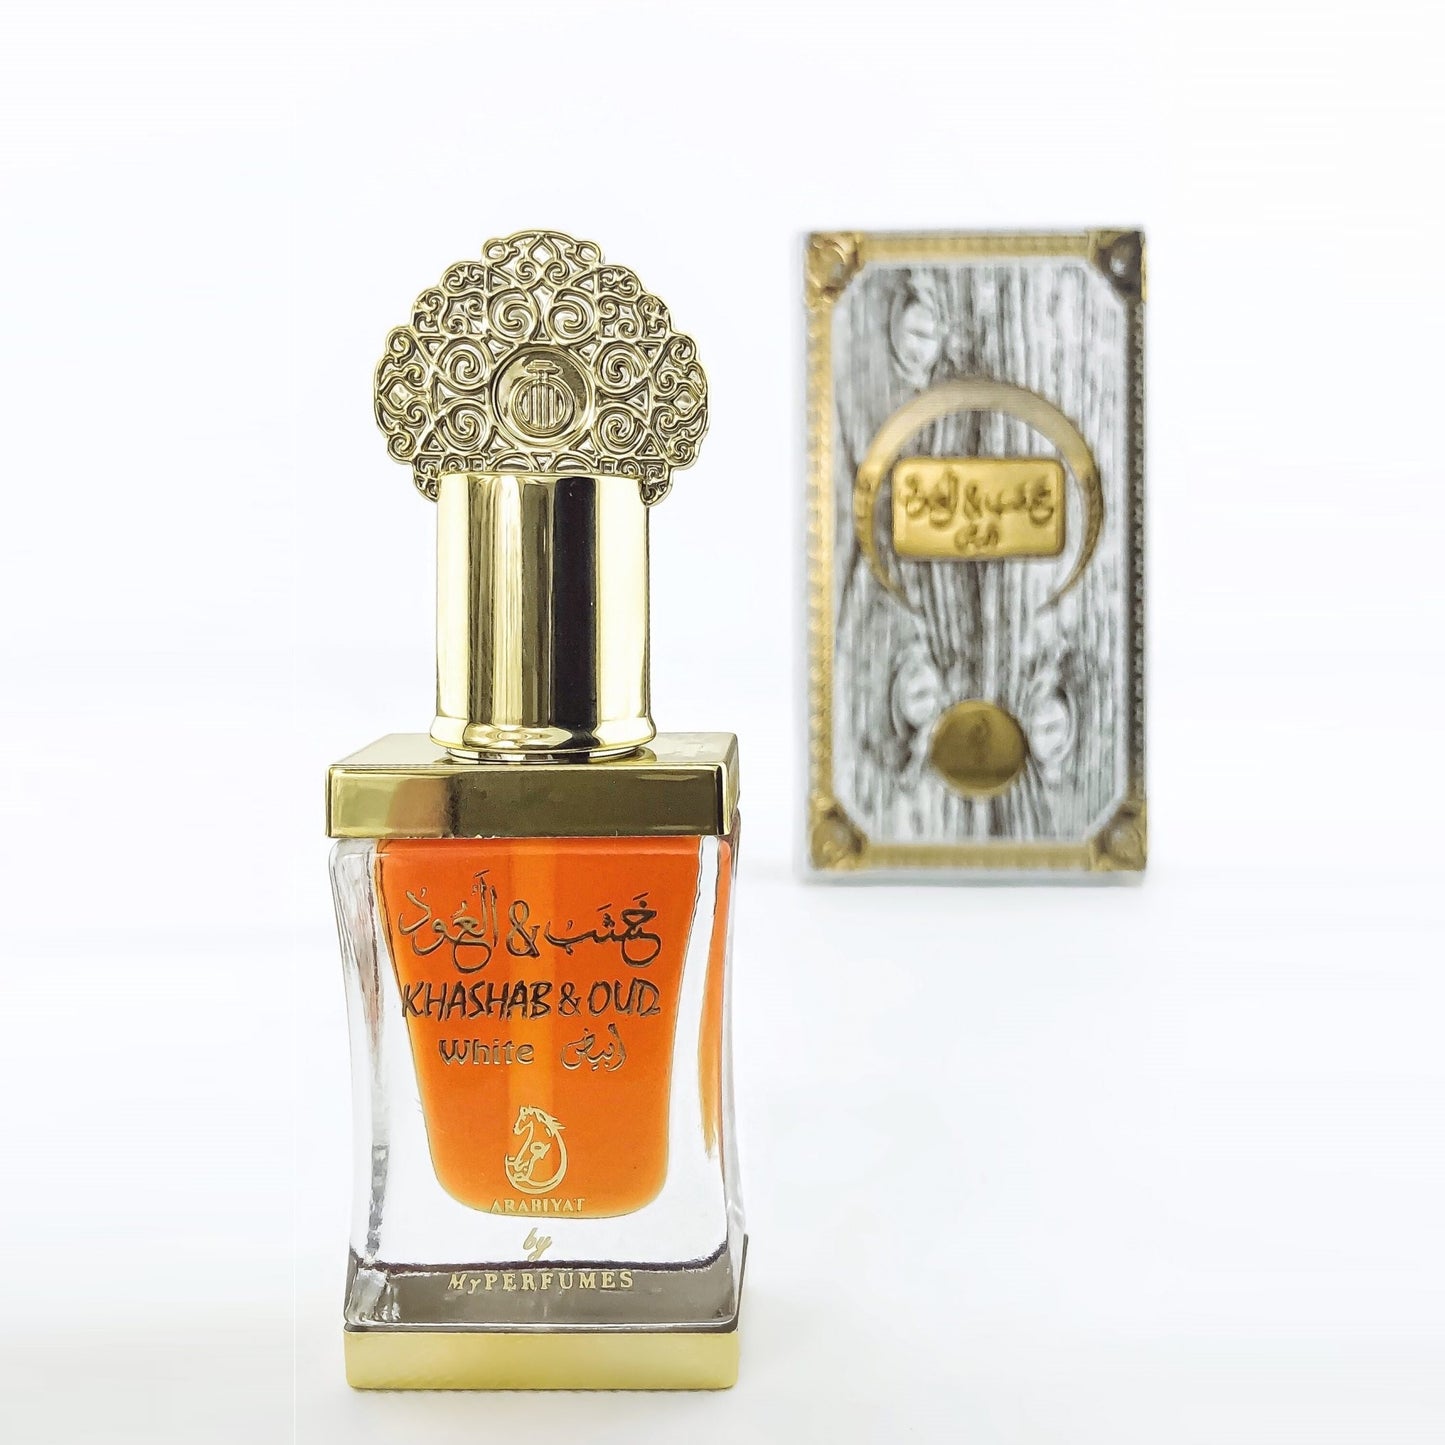 12 ml de aceite de perfume Khashab & Oud fragancia almizclada floral blanca para mujer